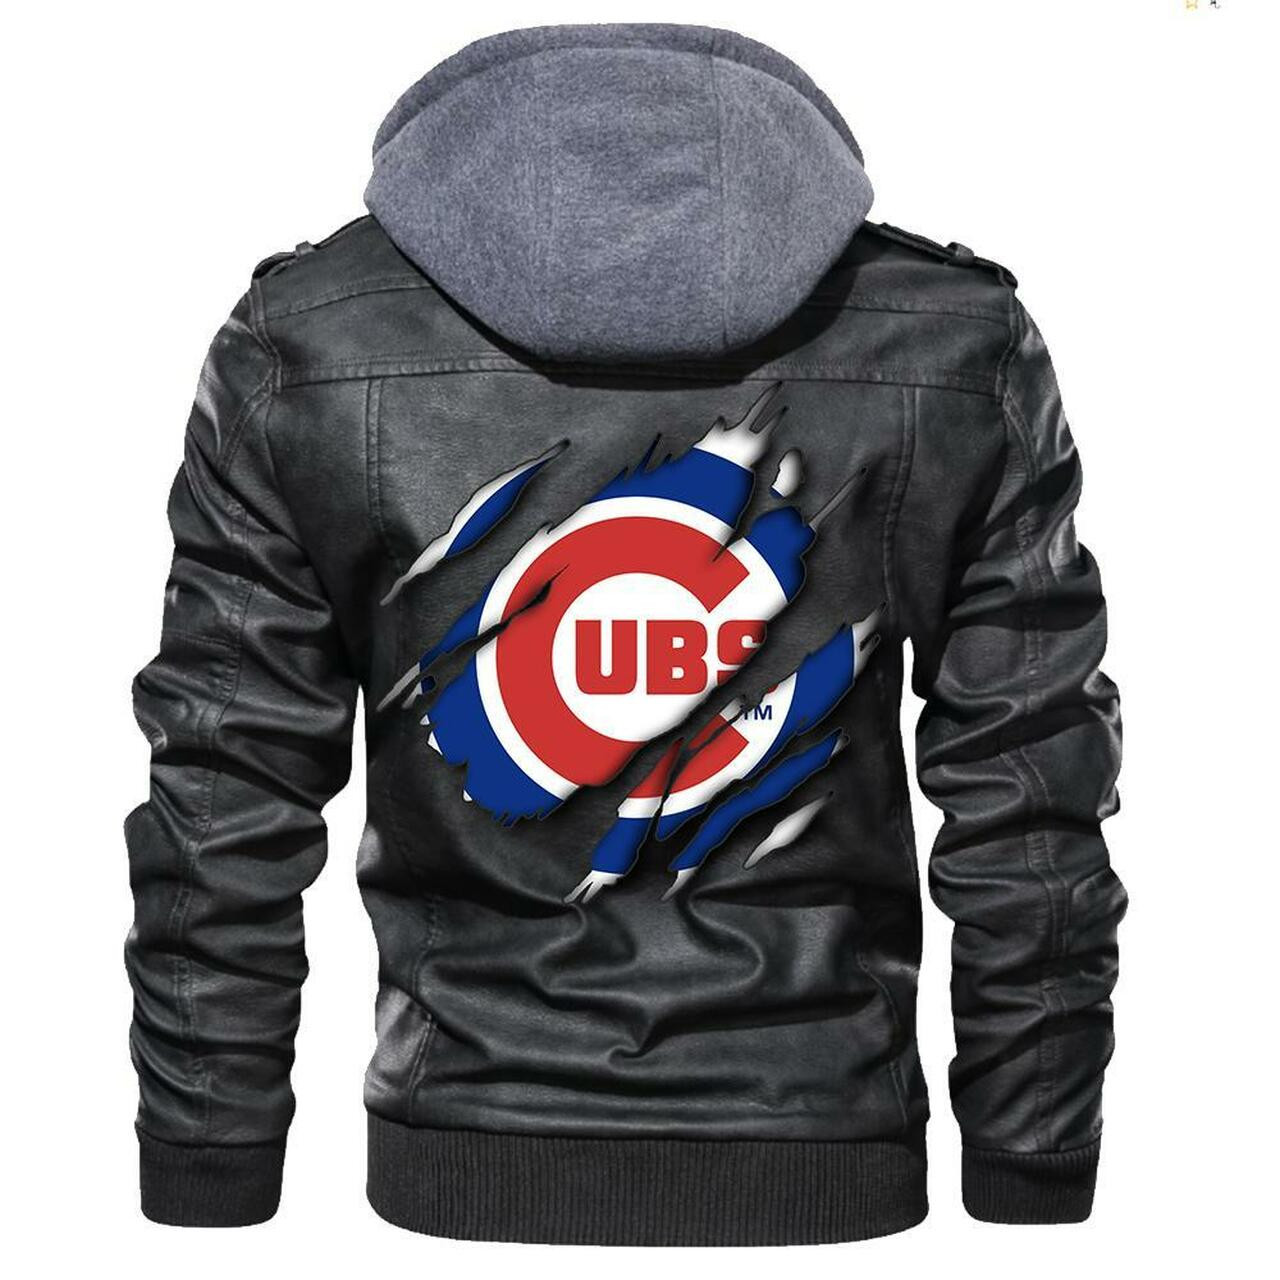 Top leather jacket Sells Best on Techcomshop 160